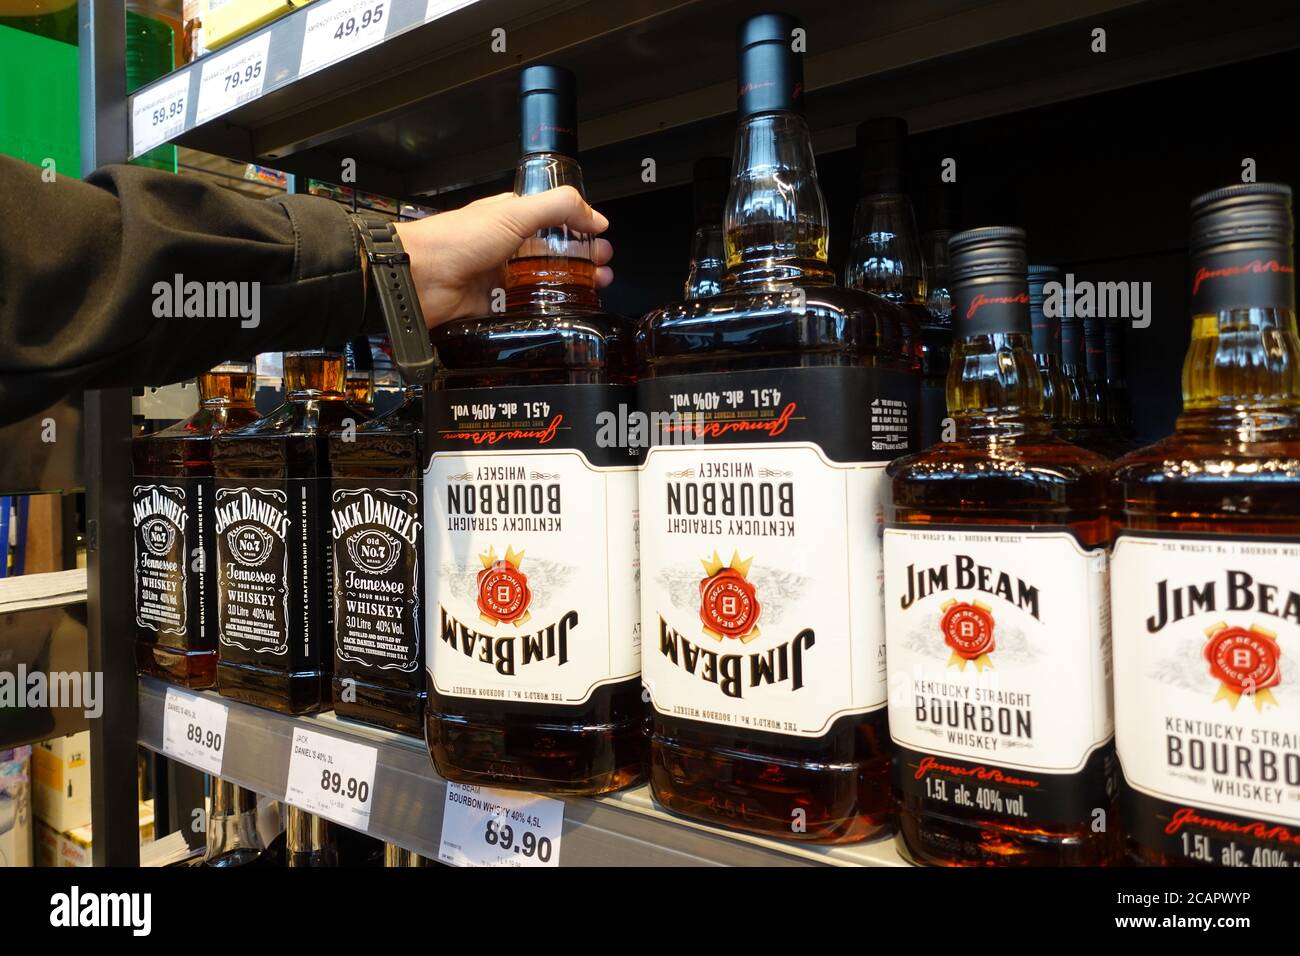 4,5 liter bottle Jim Beam in a supermarket Stock Photo